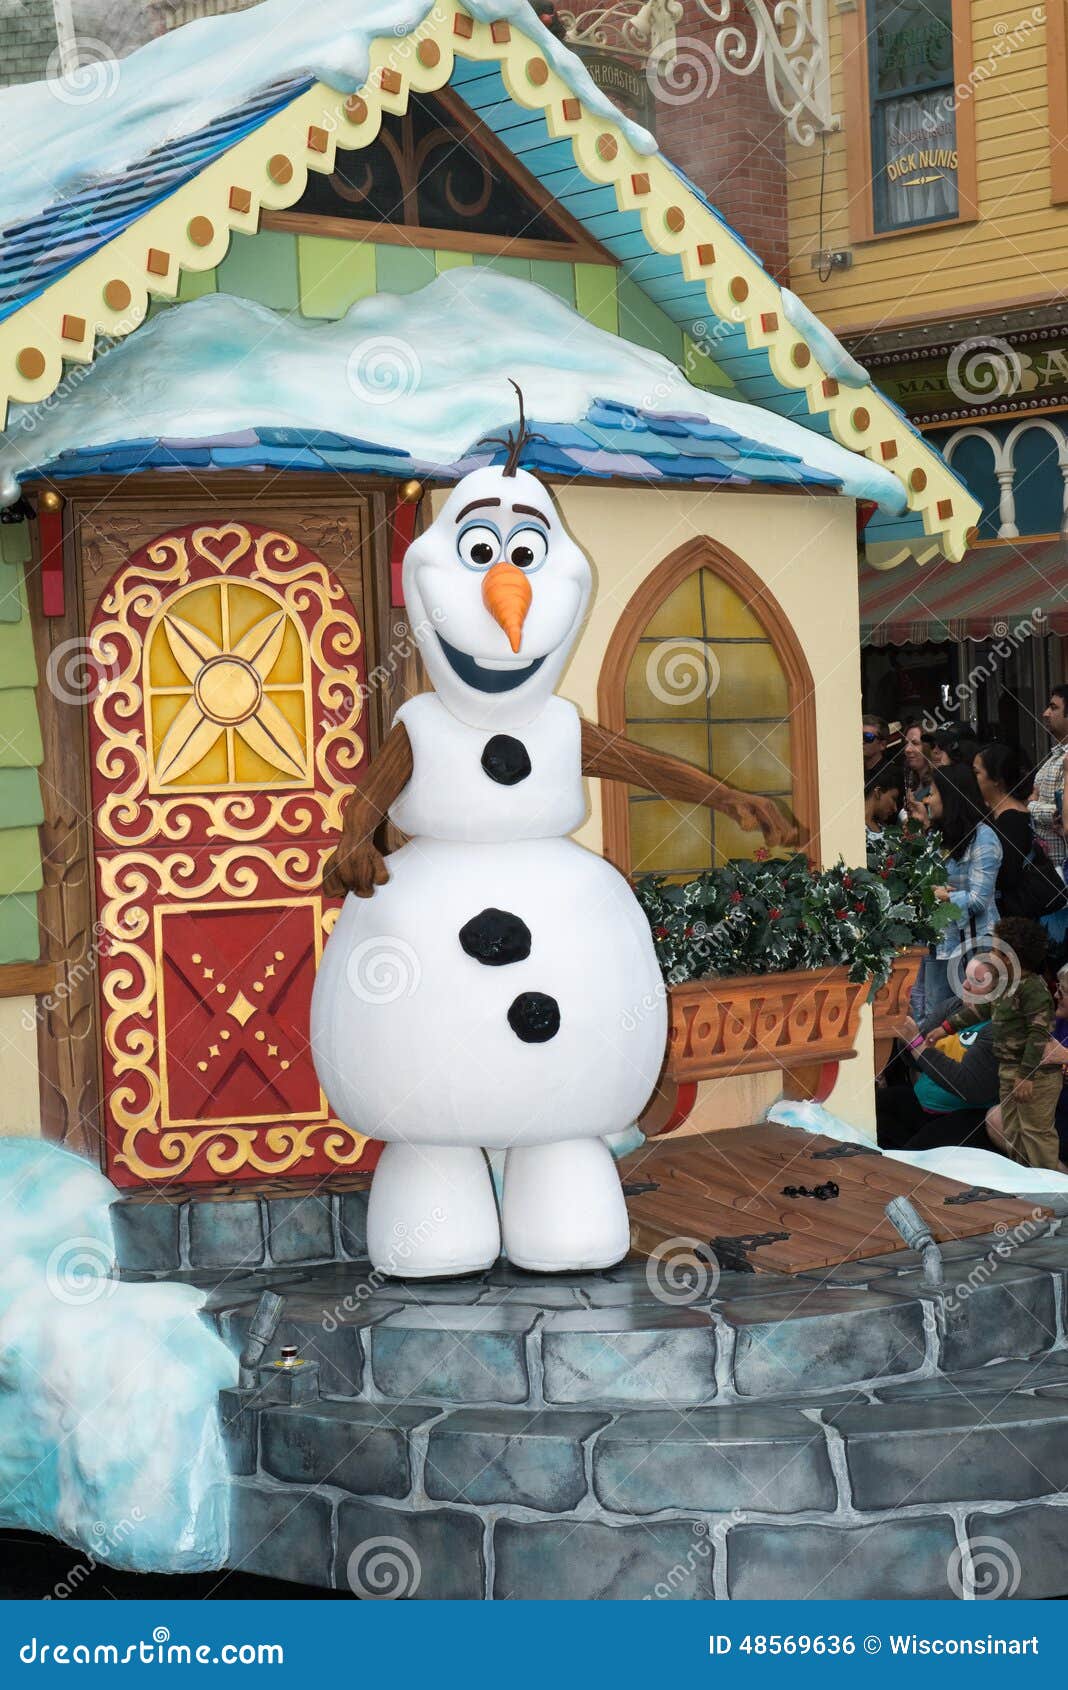 Disney Frozen Olaf Snowman Photo - Image wisconsinart, 48569636